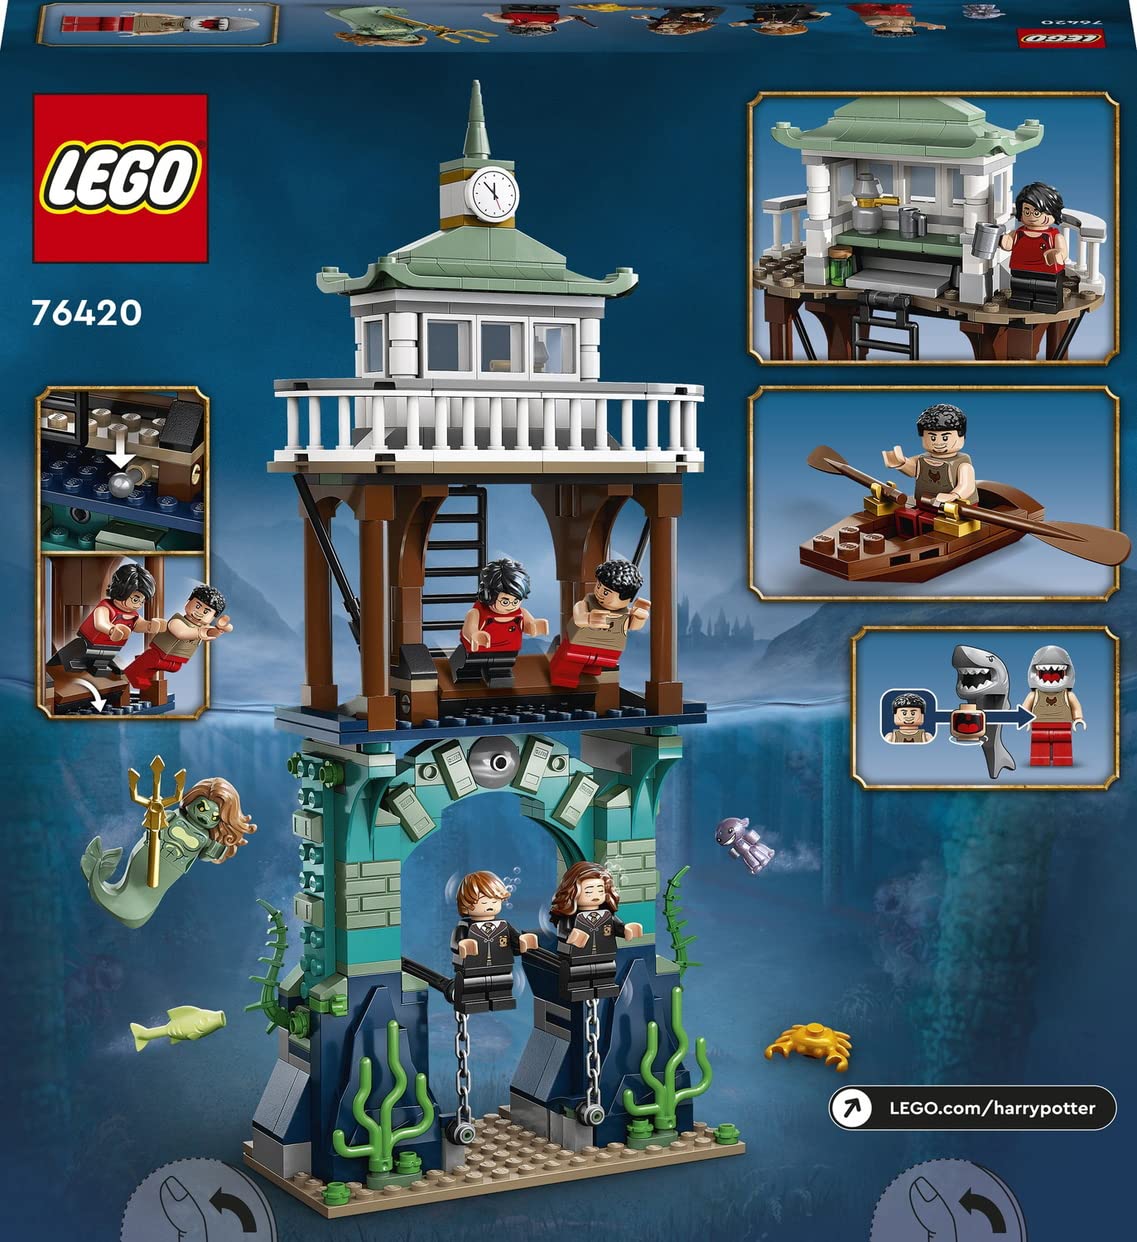 Lego Harry Potter Triwizard Tournament: The Black Lake | 8Yrs+